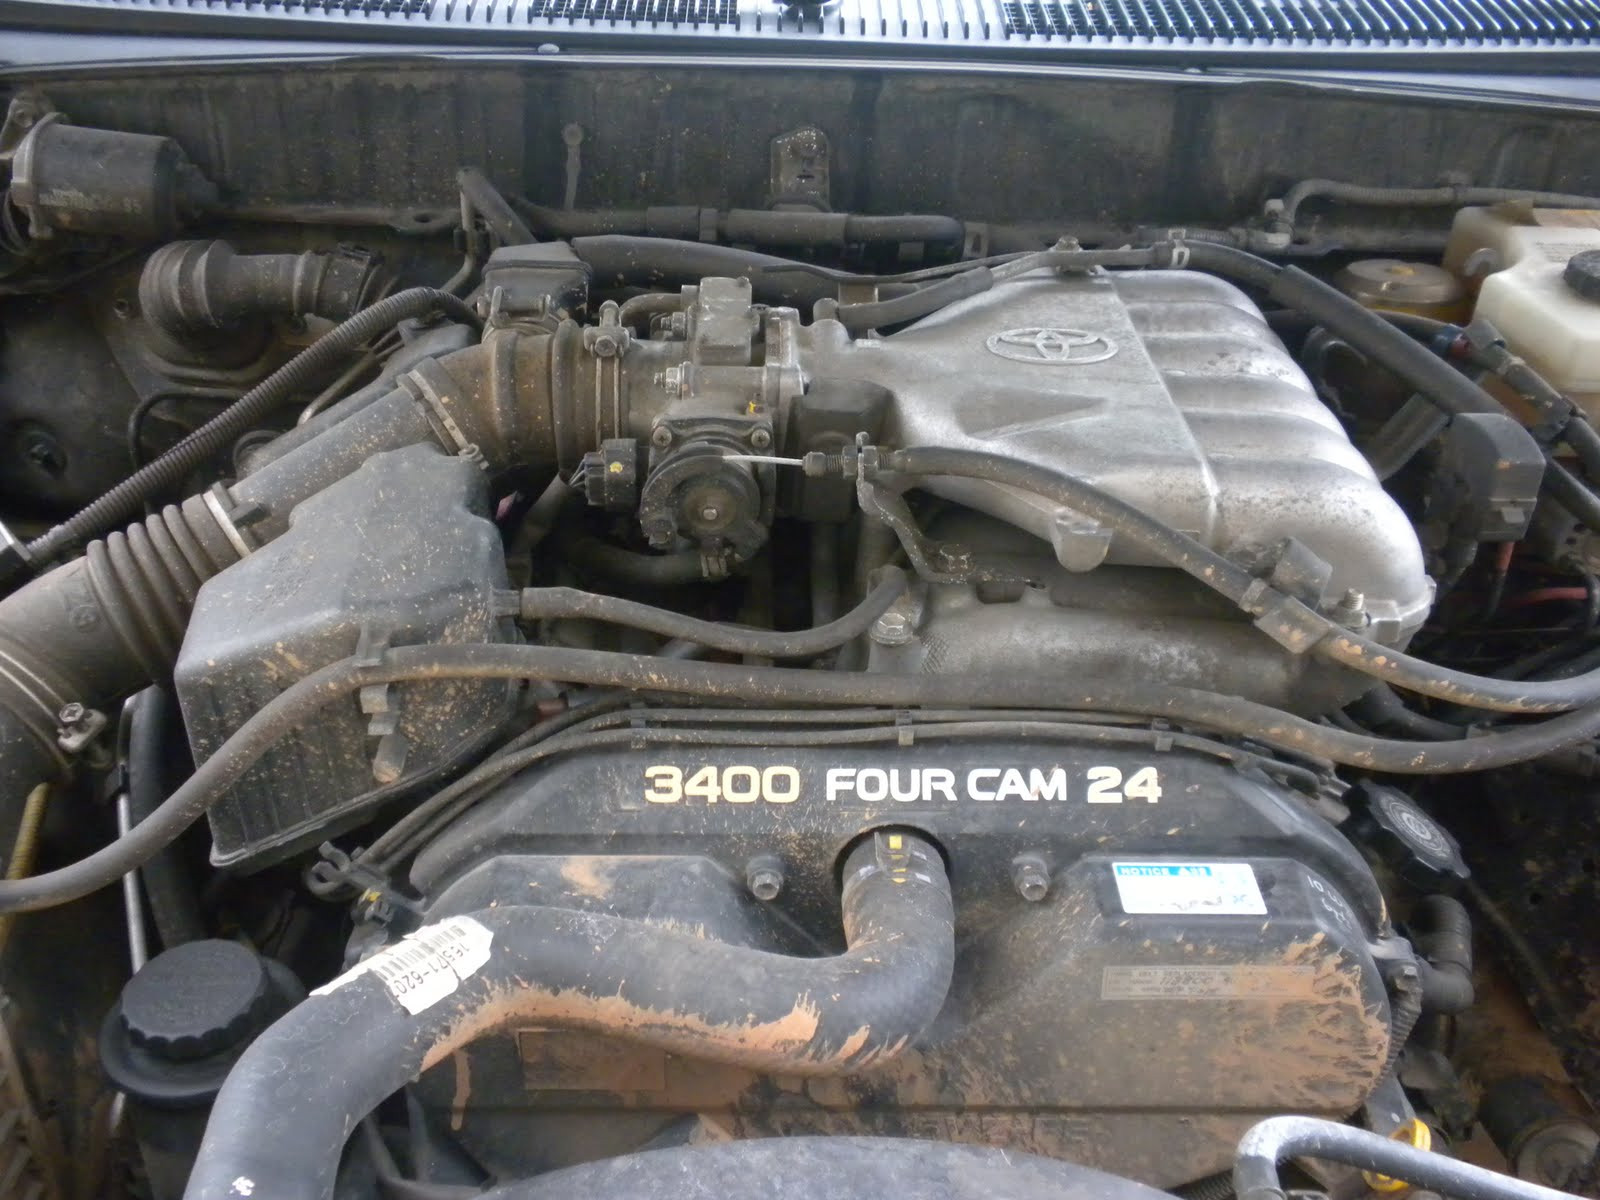 2000 toyota 4runner Engine Diagram My Car Battles: Spark Plug Wires On My 02′ toyota 4runner 3.4 L V6. Of 2000 toyota 4runner Engine Diagram